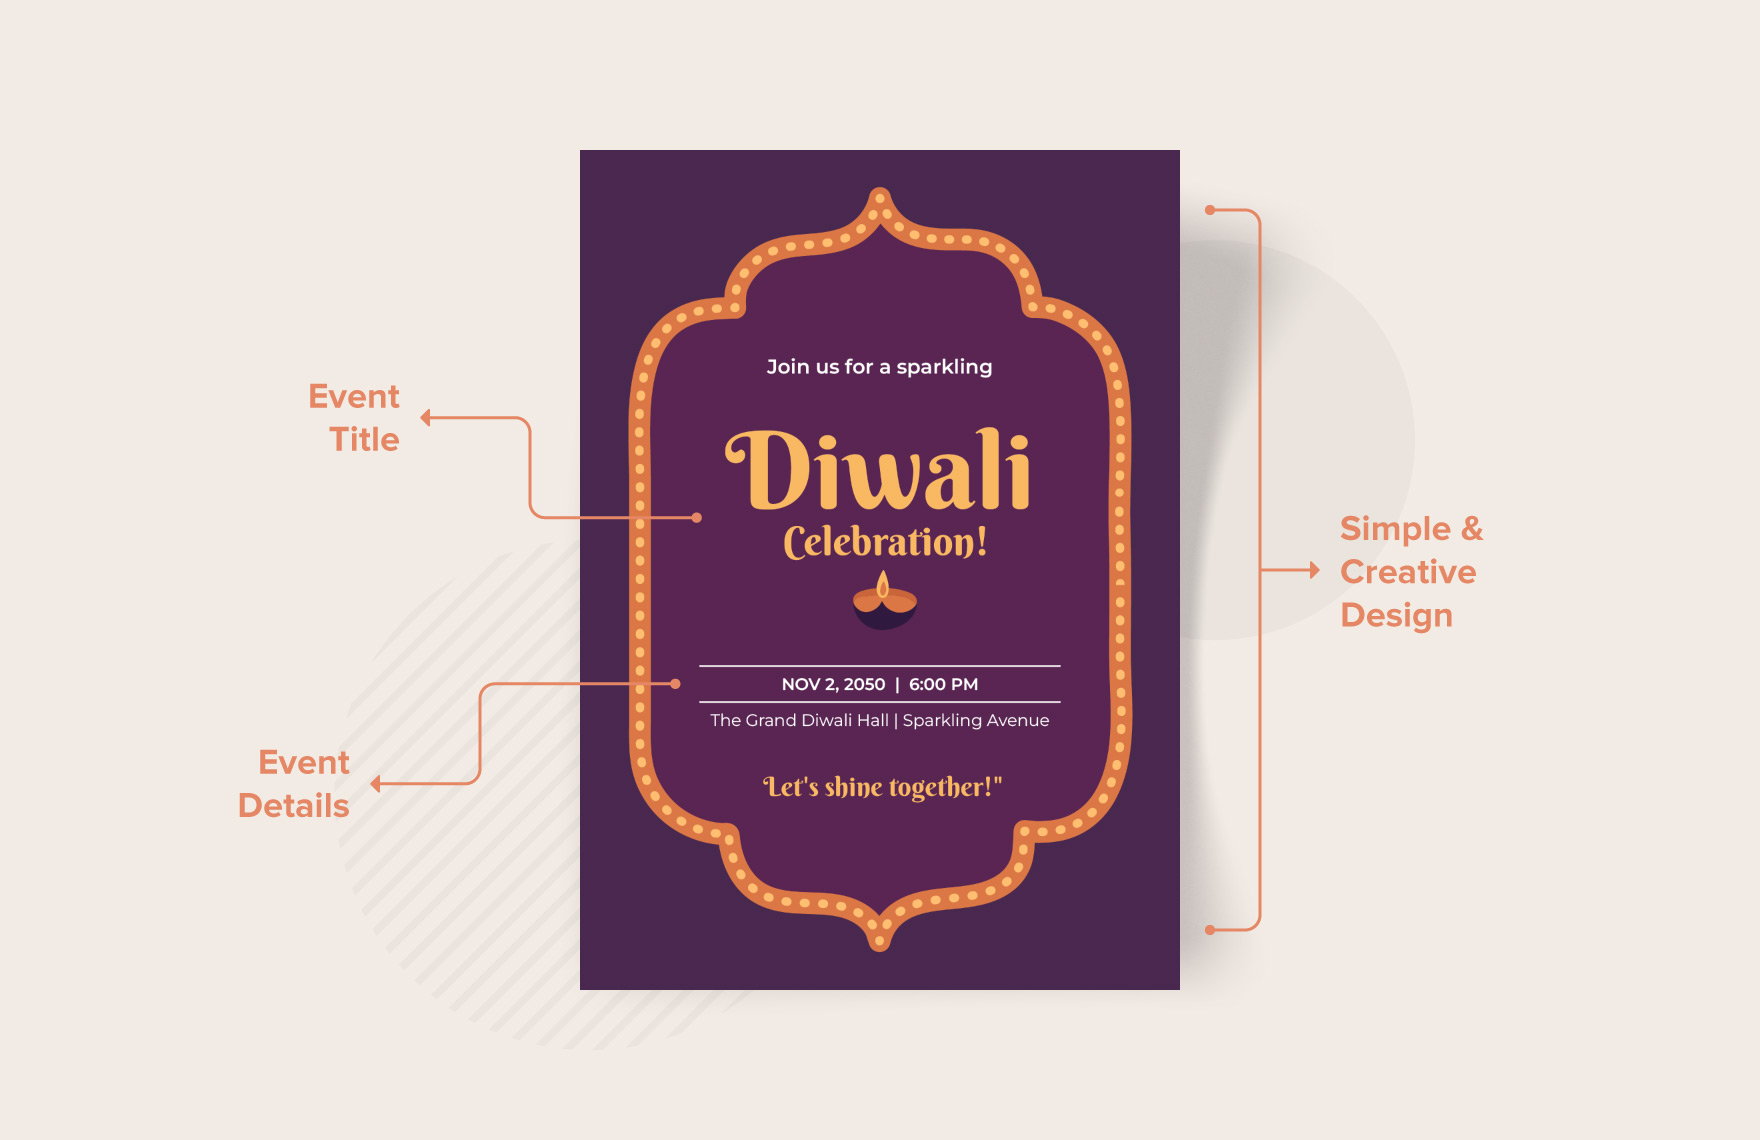 Diwali Invitation Template